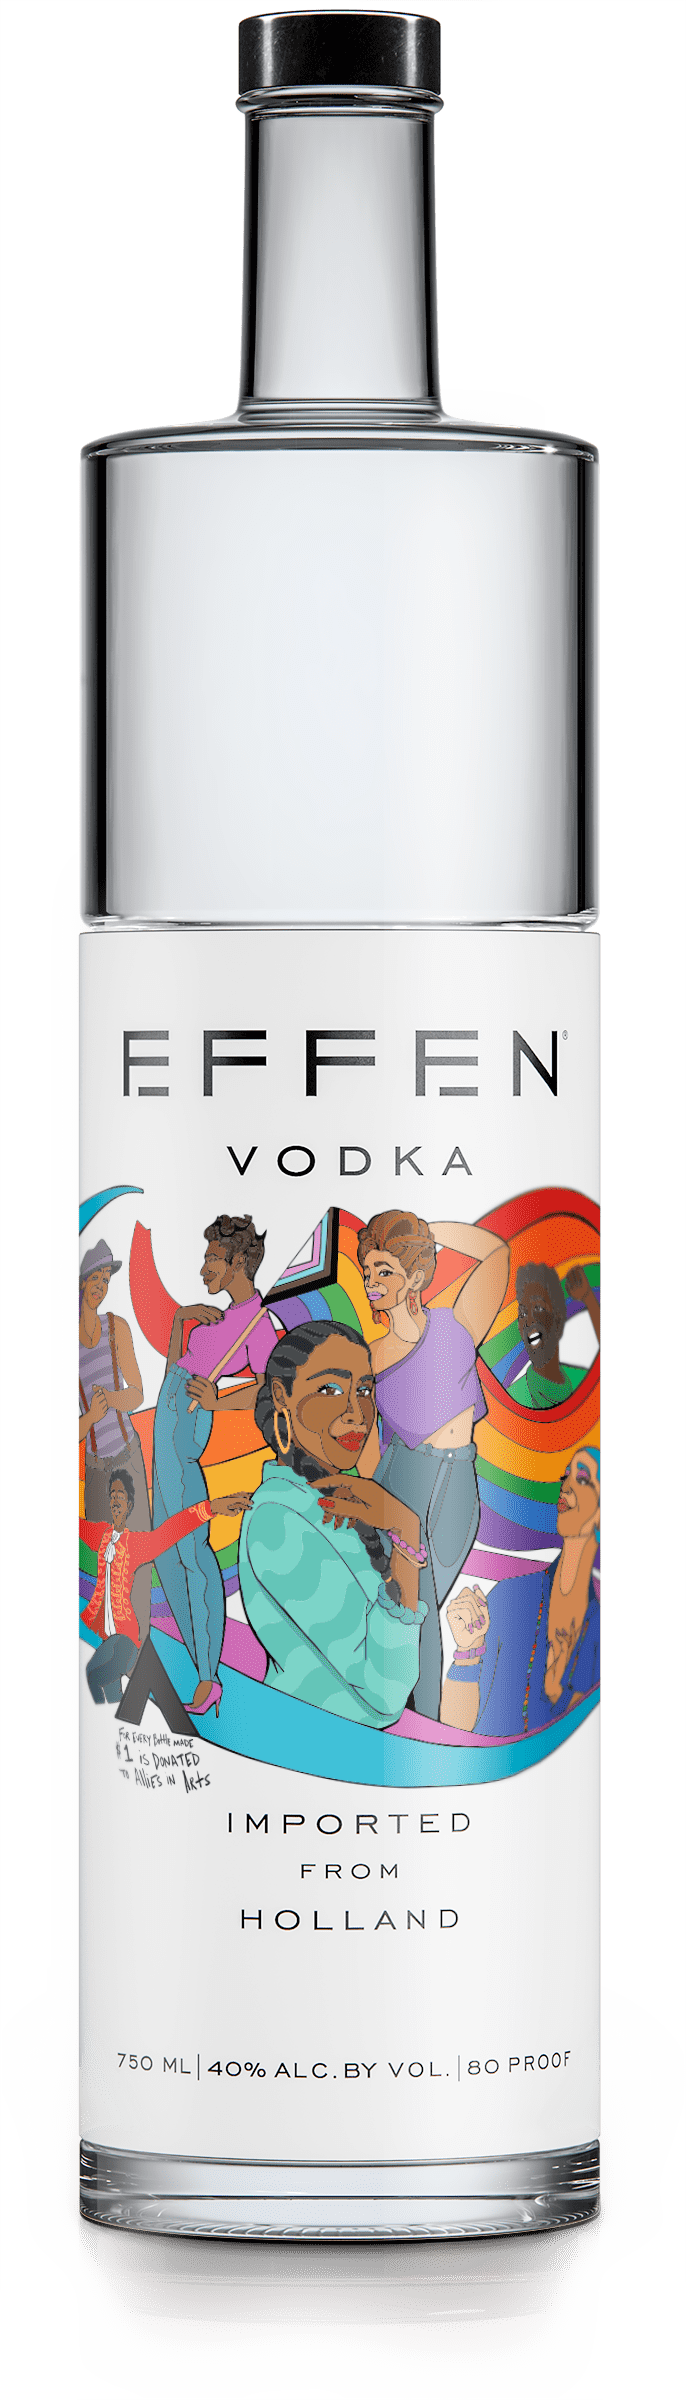 EFFEN Pride Vodka bottle shot